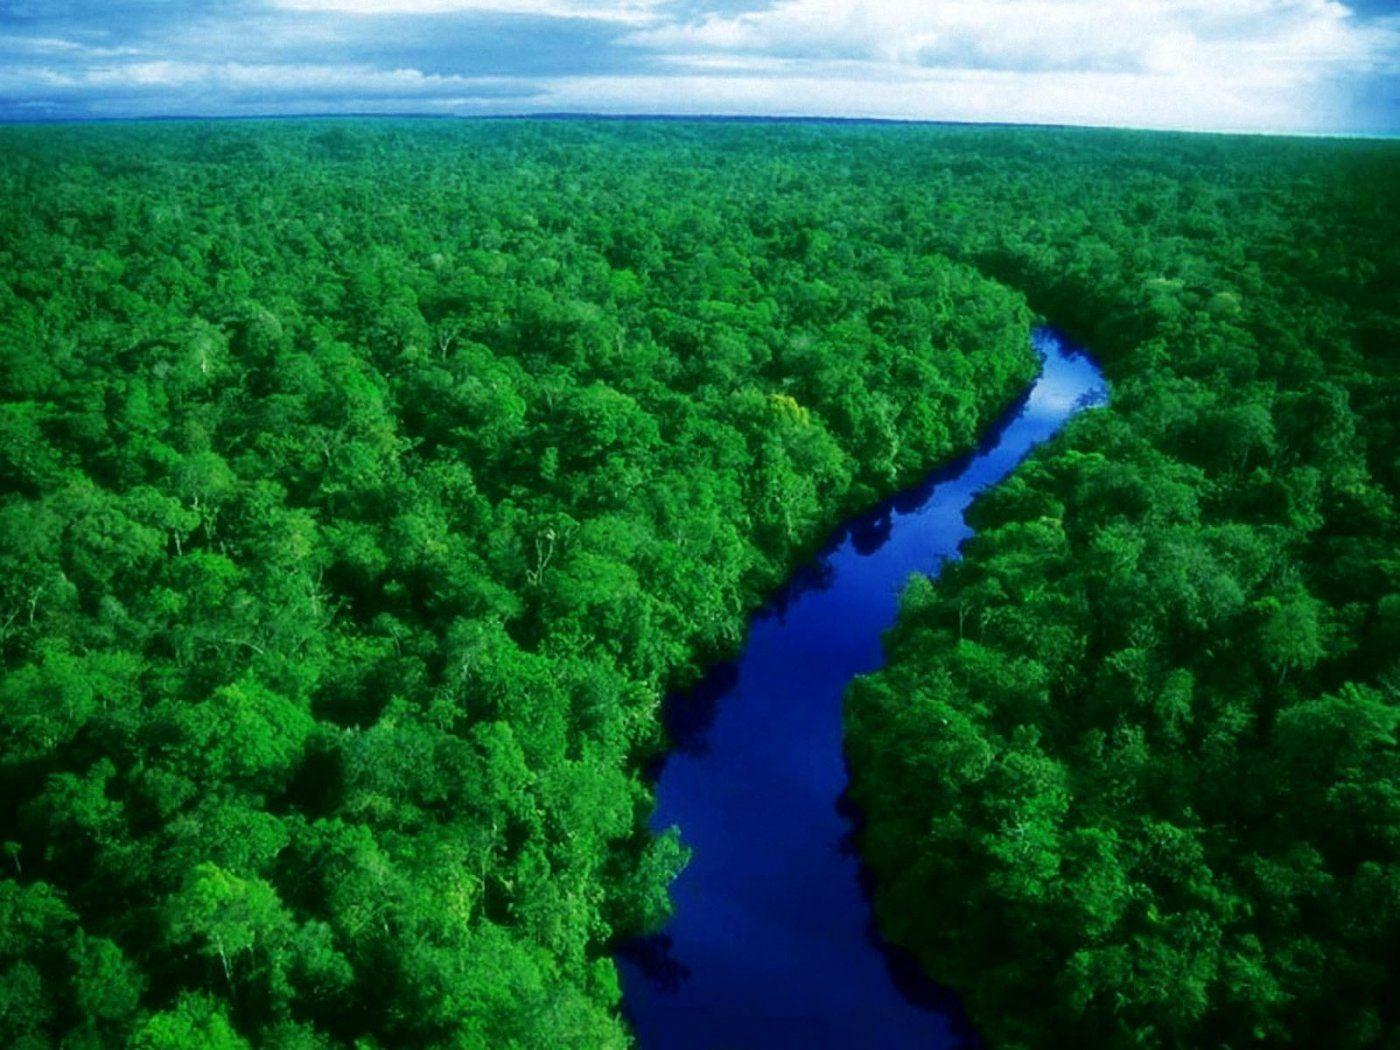 Amazon Forest, Brazil. Travel. Amazon rainforest